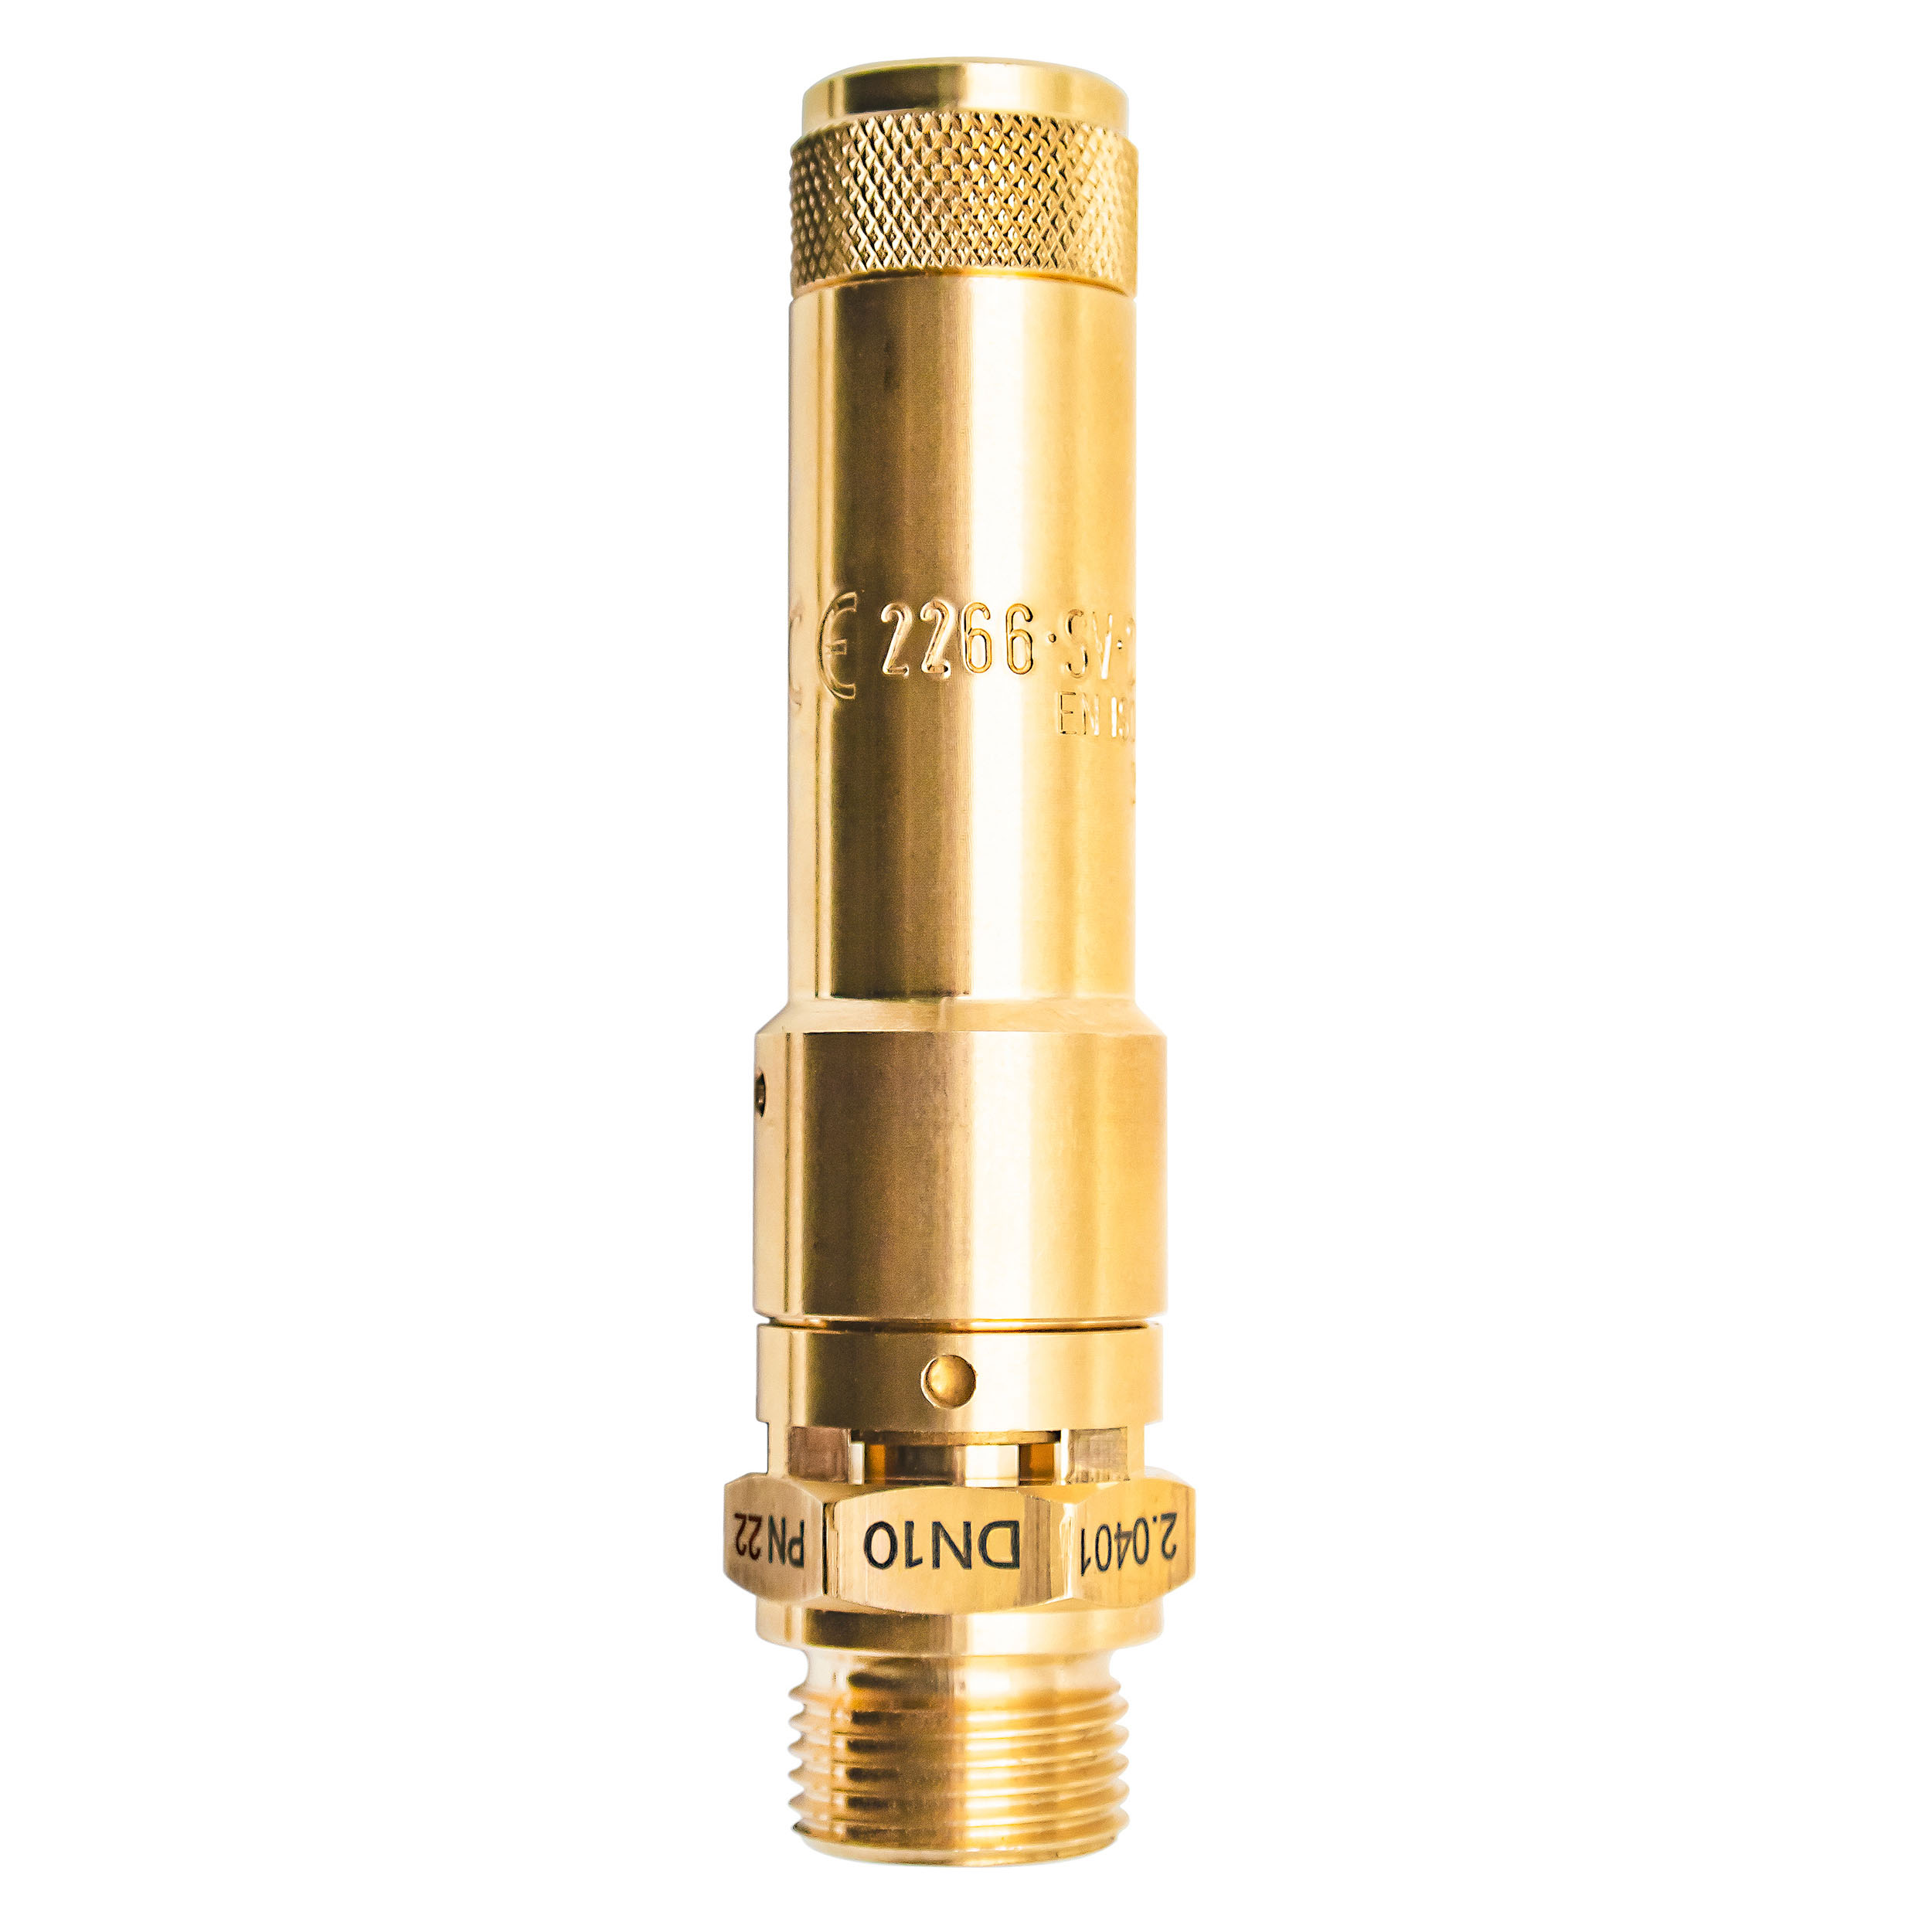 Savety valve component tested DN 10, G½, set pressure: 8.3 bar (120,35 psi)